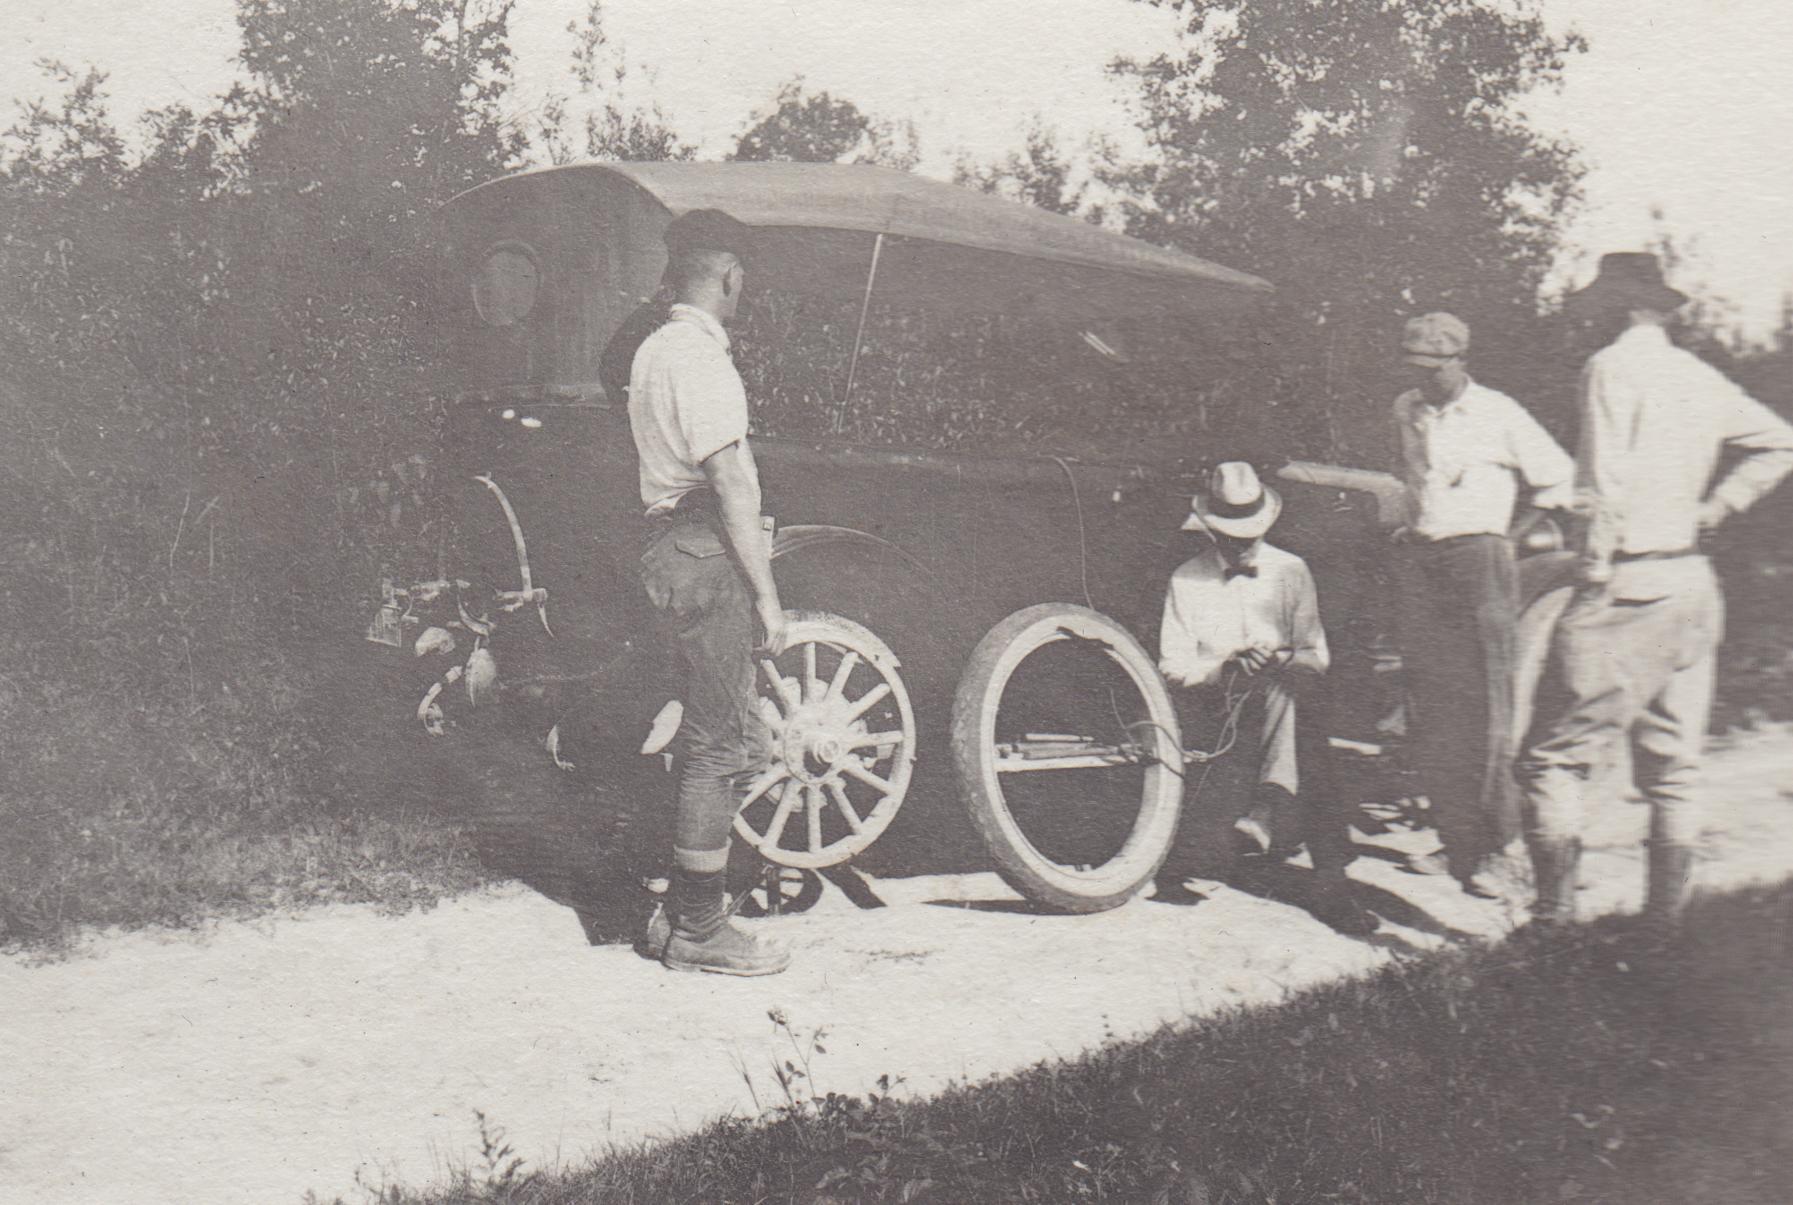 1918 Training camp - repairing flat tire